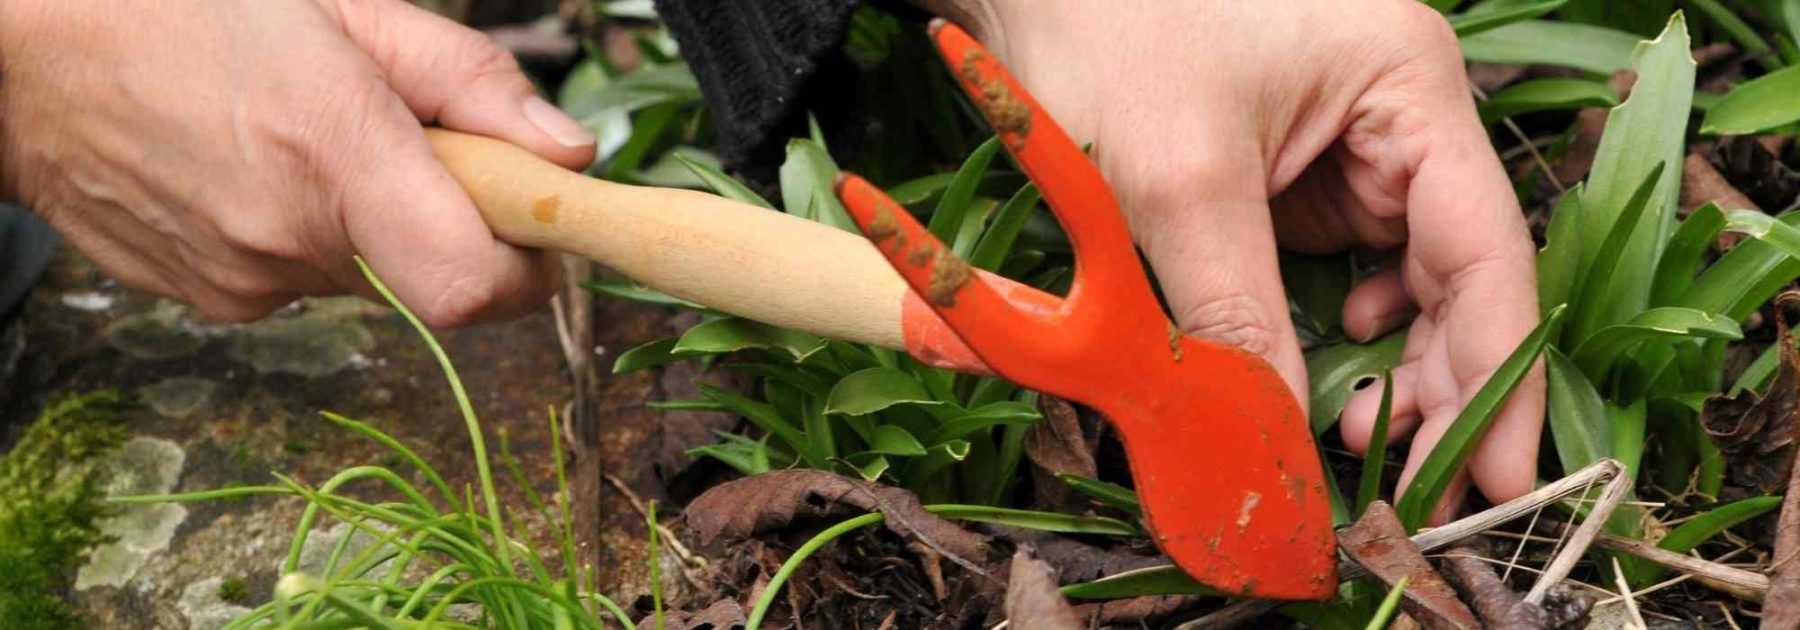 AVR outils de jardinage à main set de 4